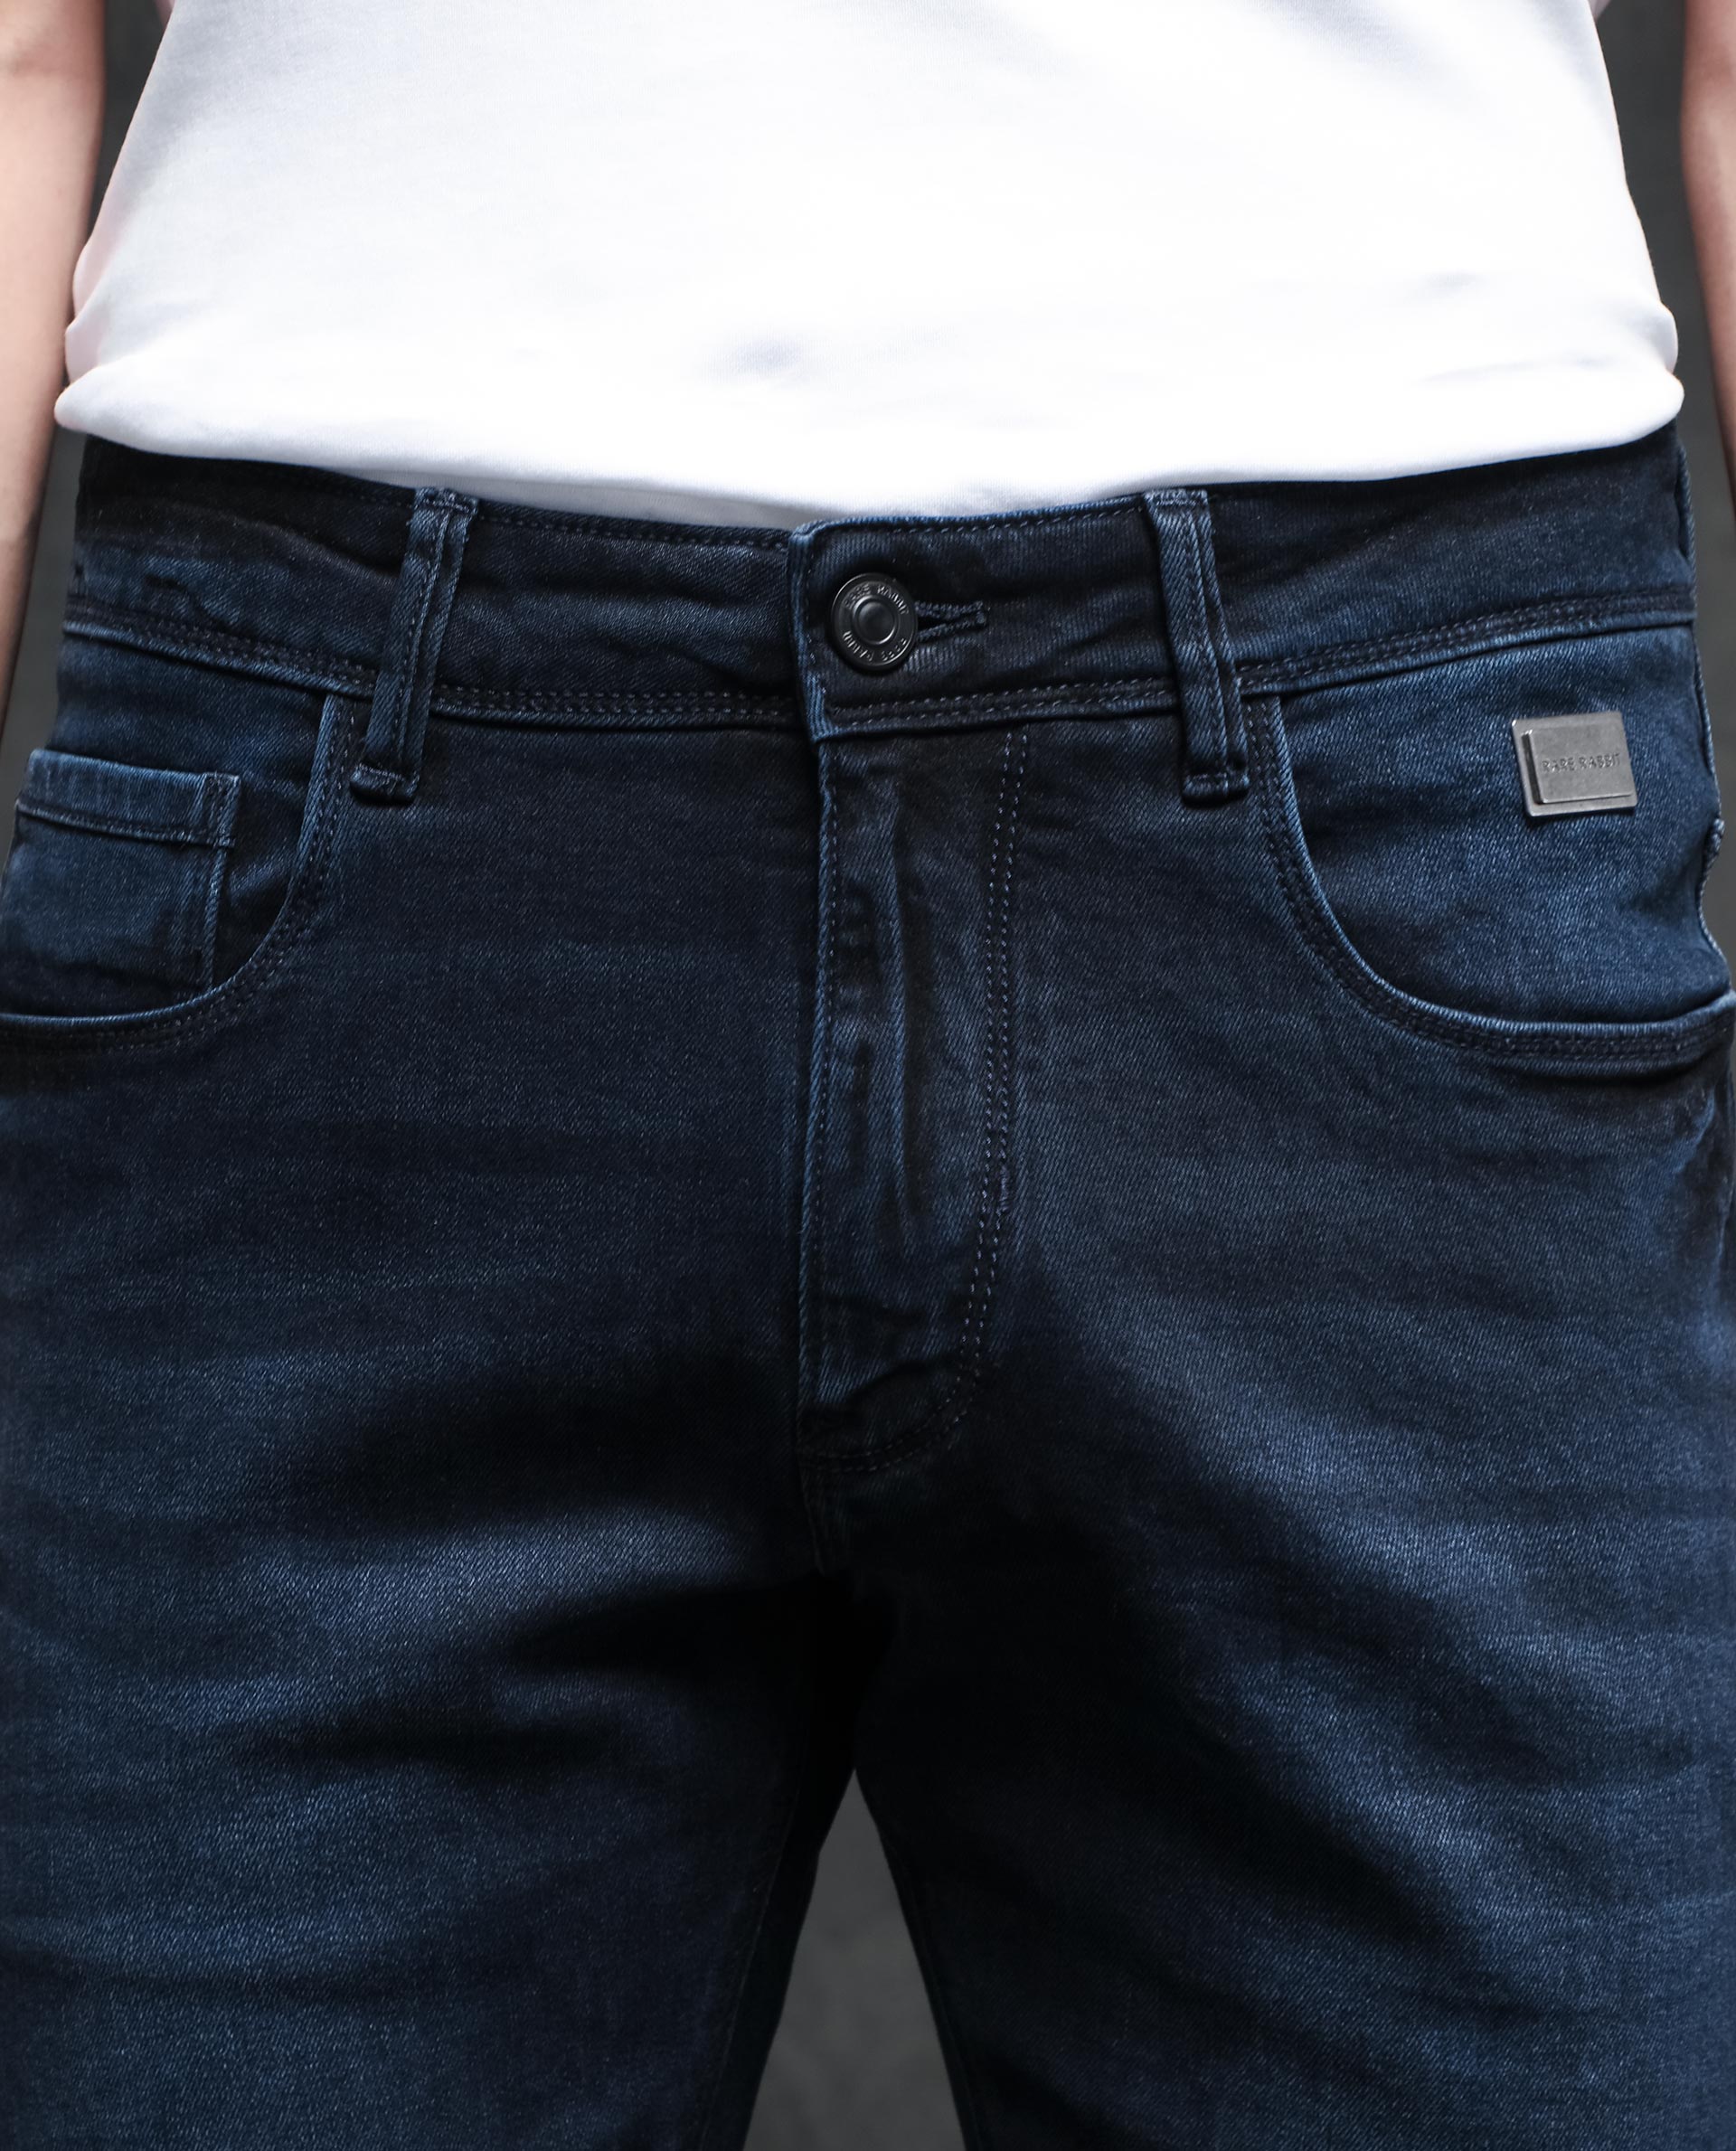 BARE DENIM 91 Boys Kids Skinny Jeans Blue Distressed Pants 100% Cotton Size  9/10 | eBay